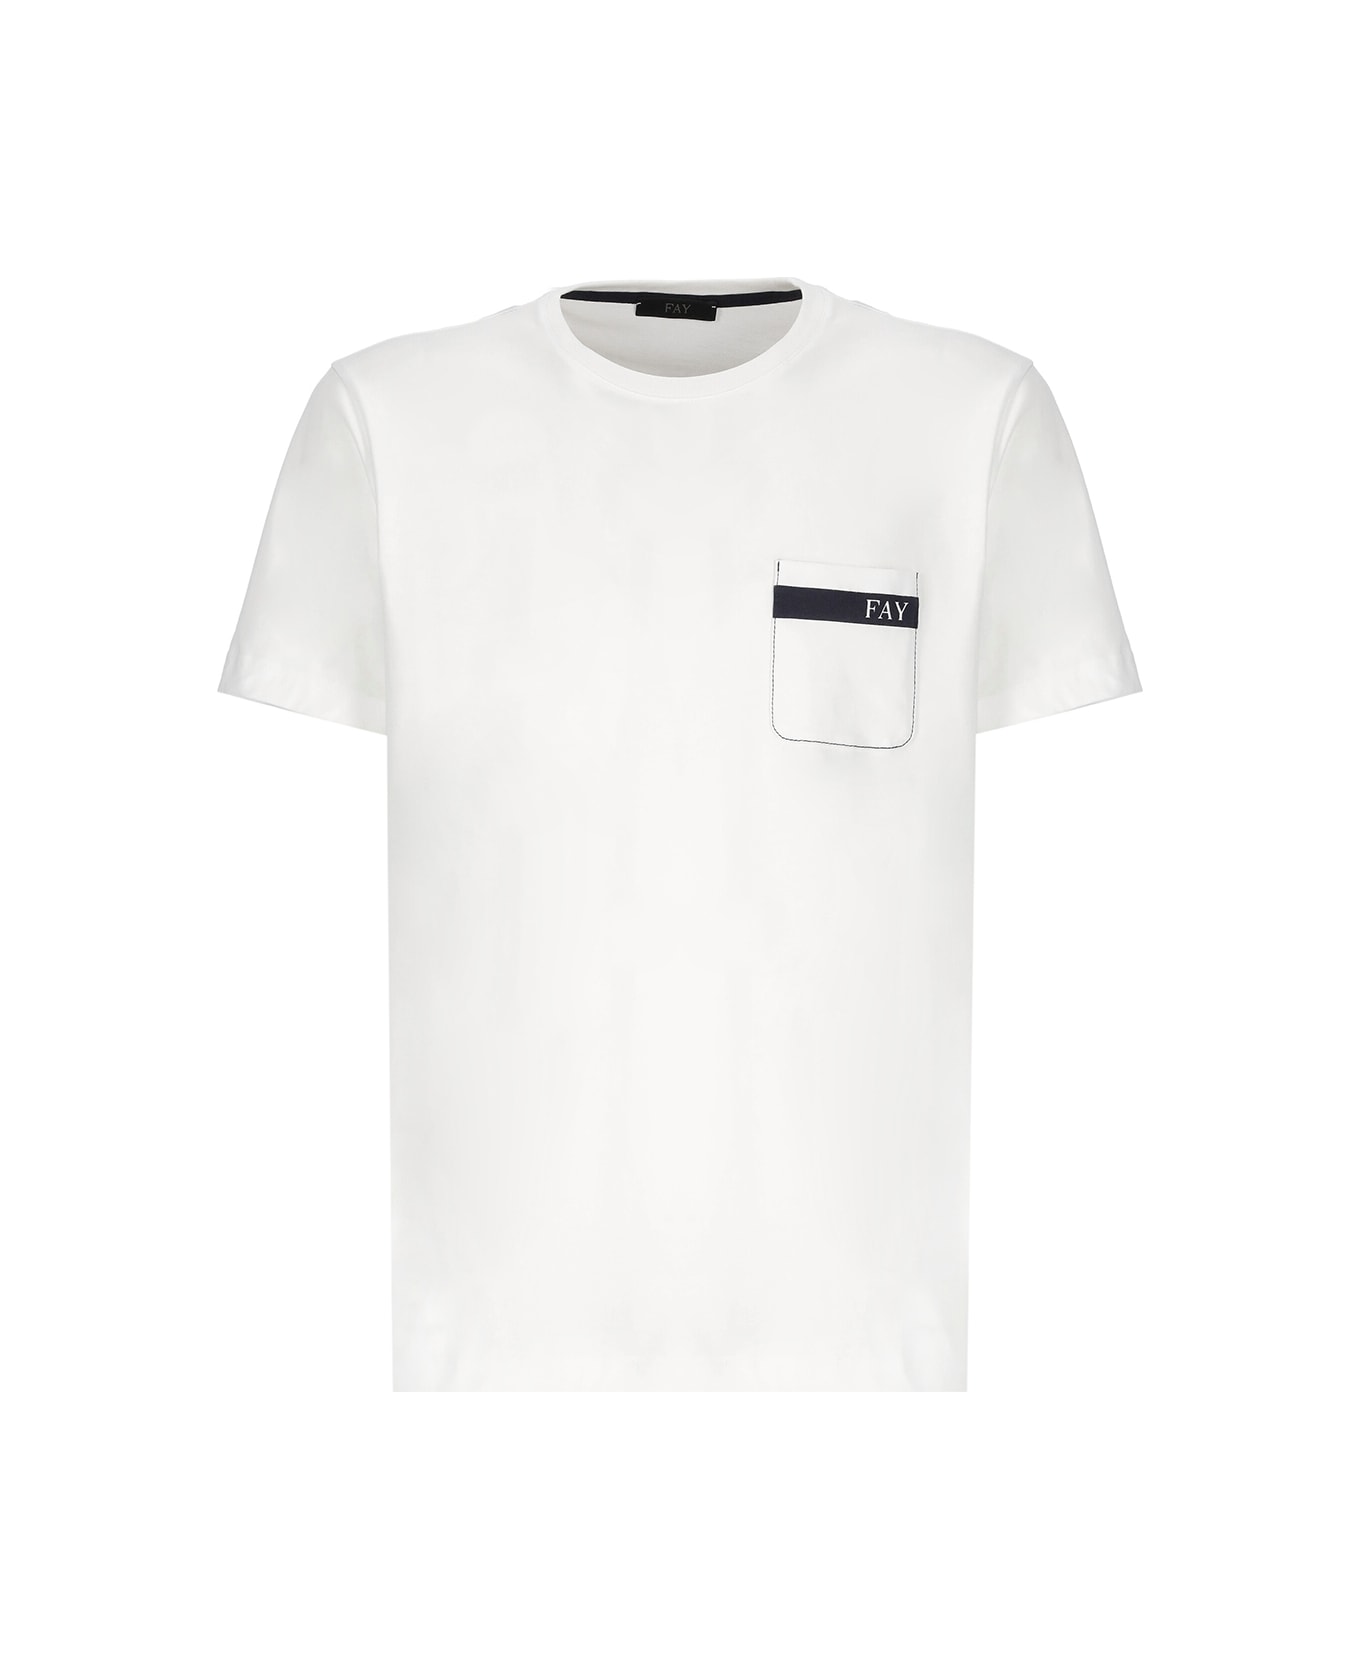 Fay Logoed T-shirt - White